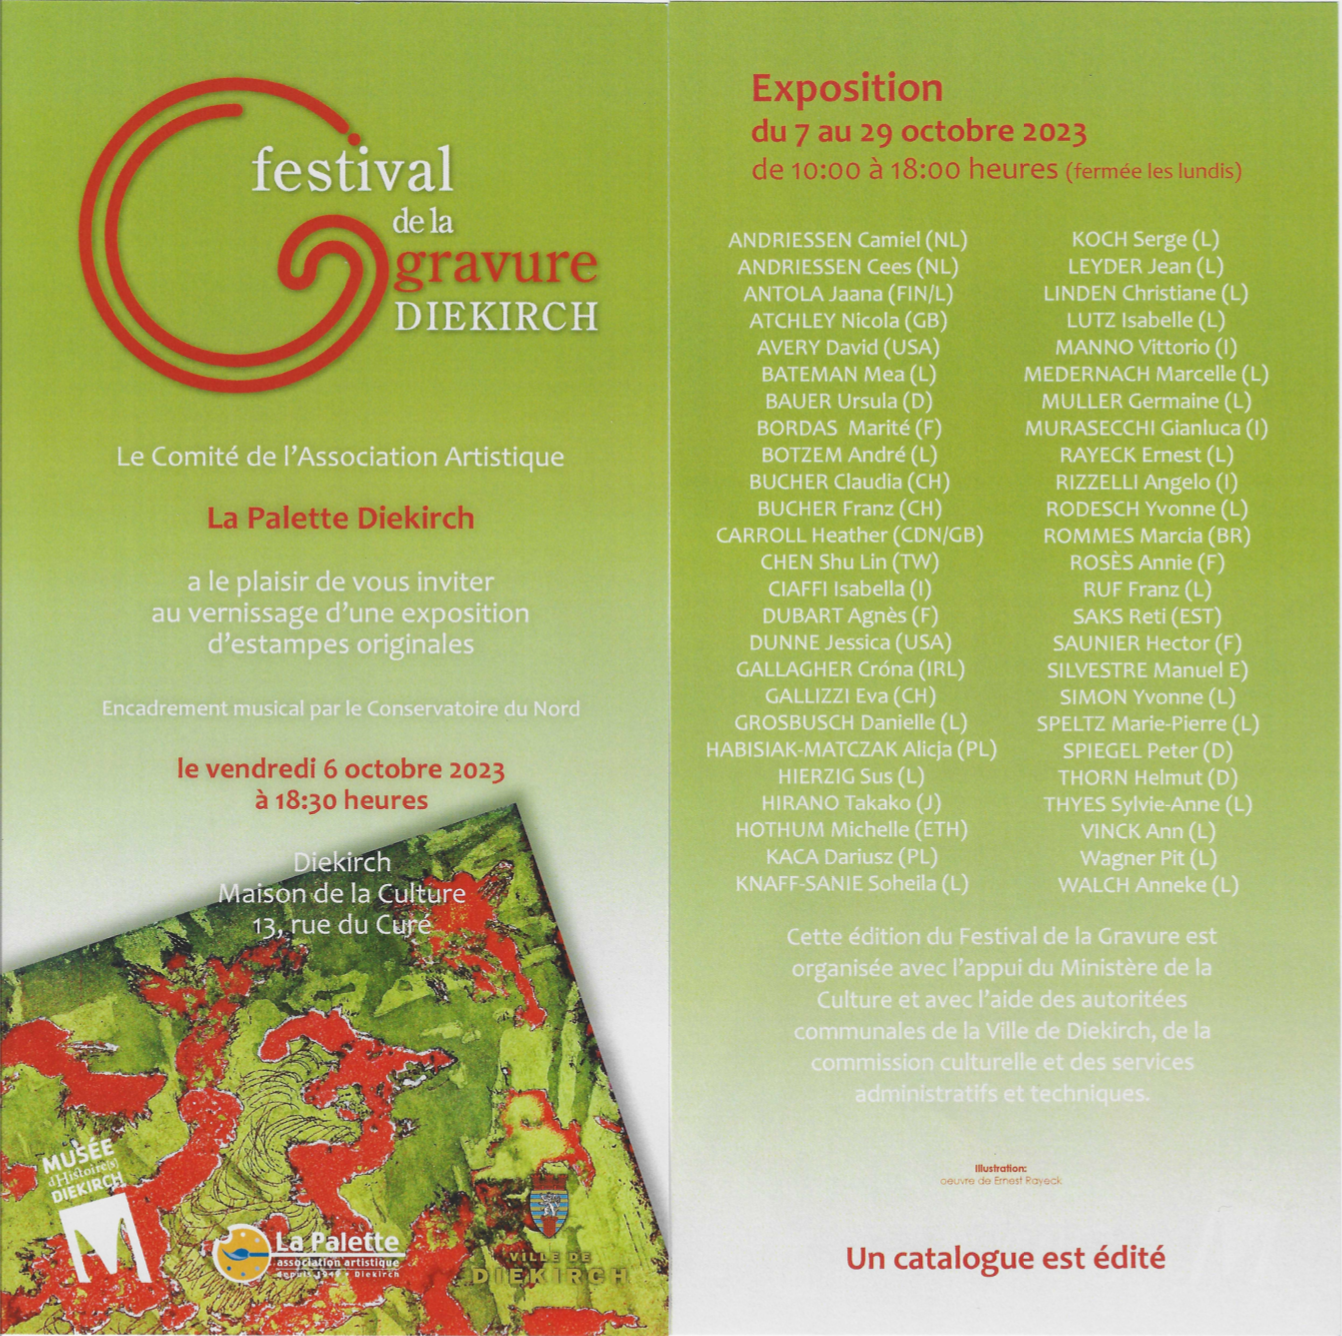 Programm des Festivals